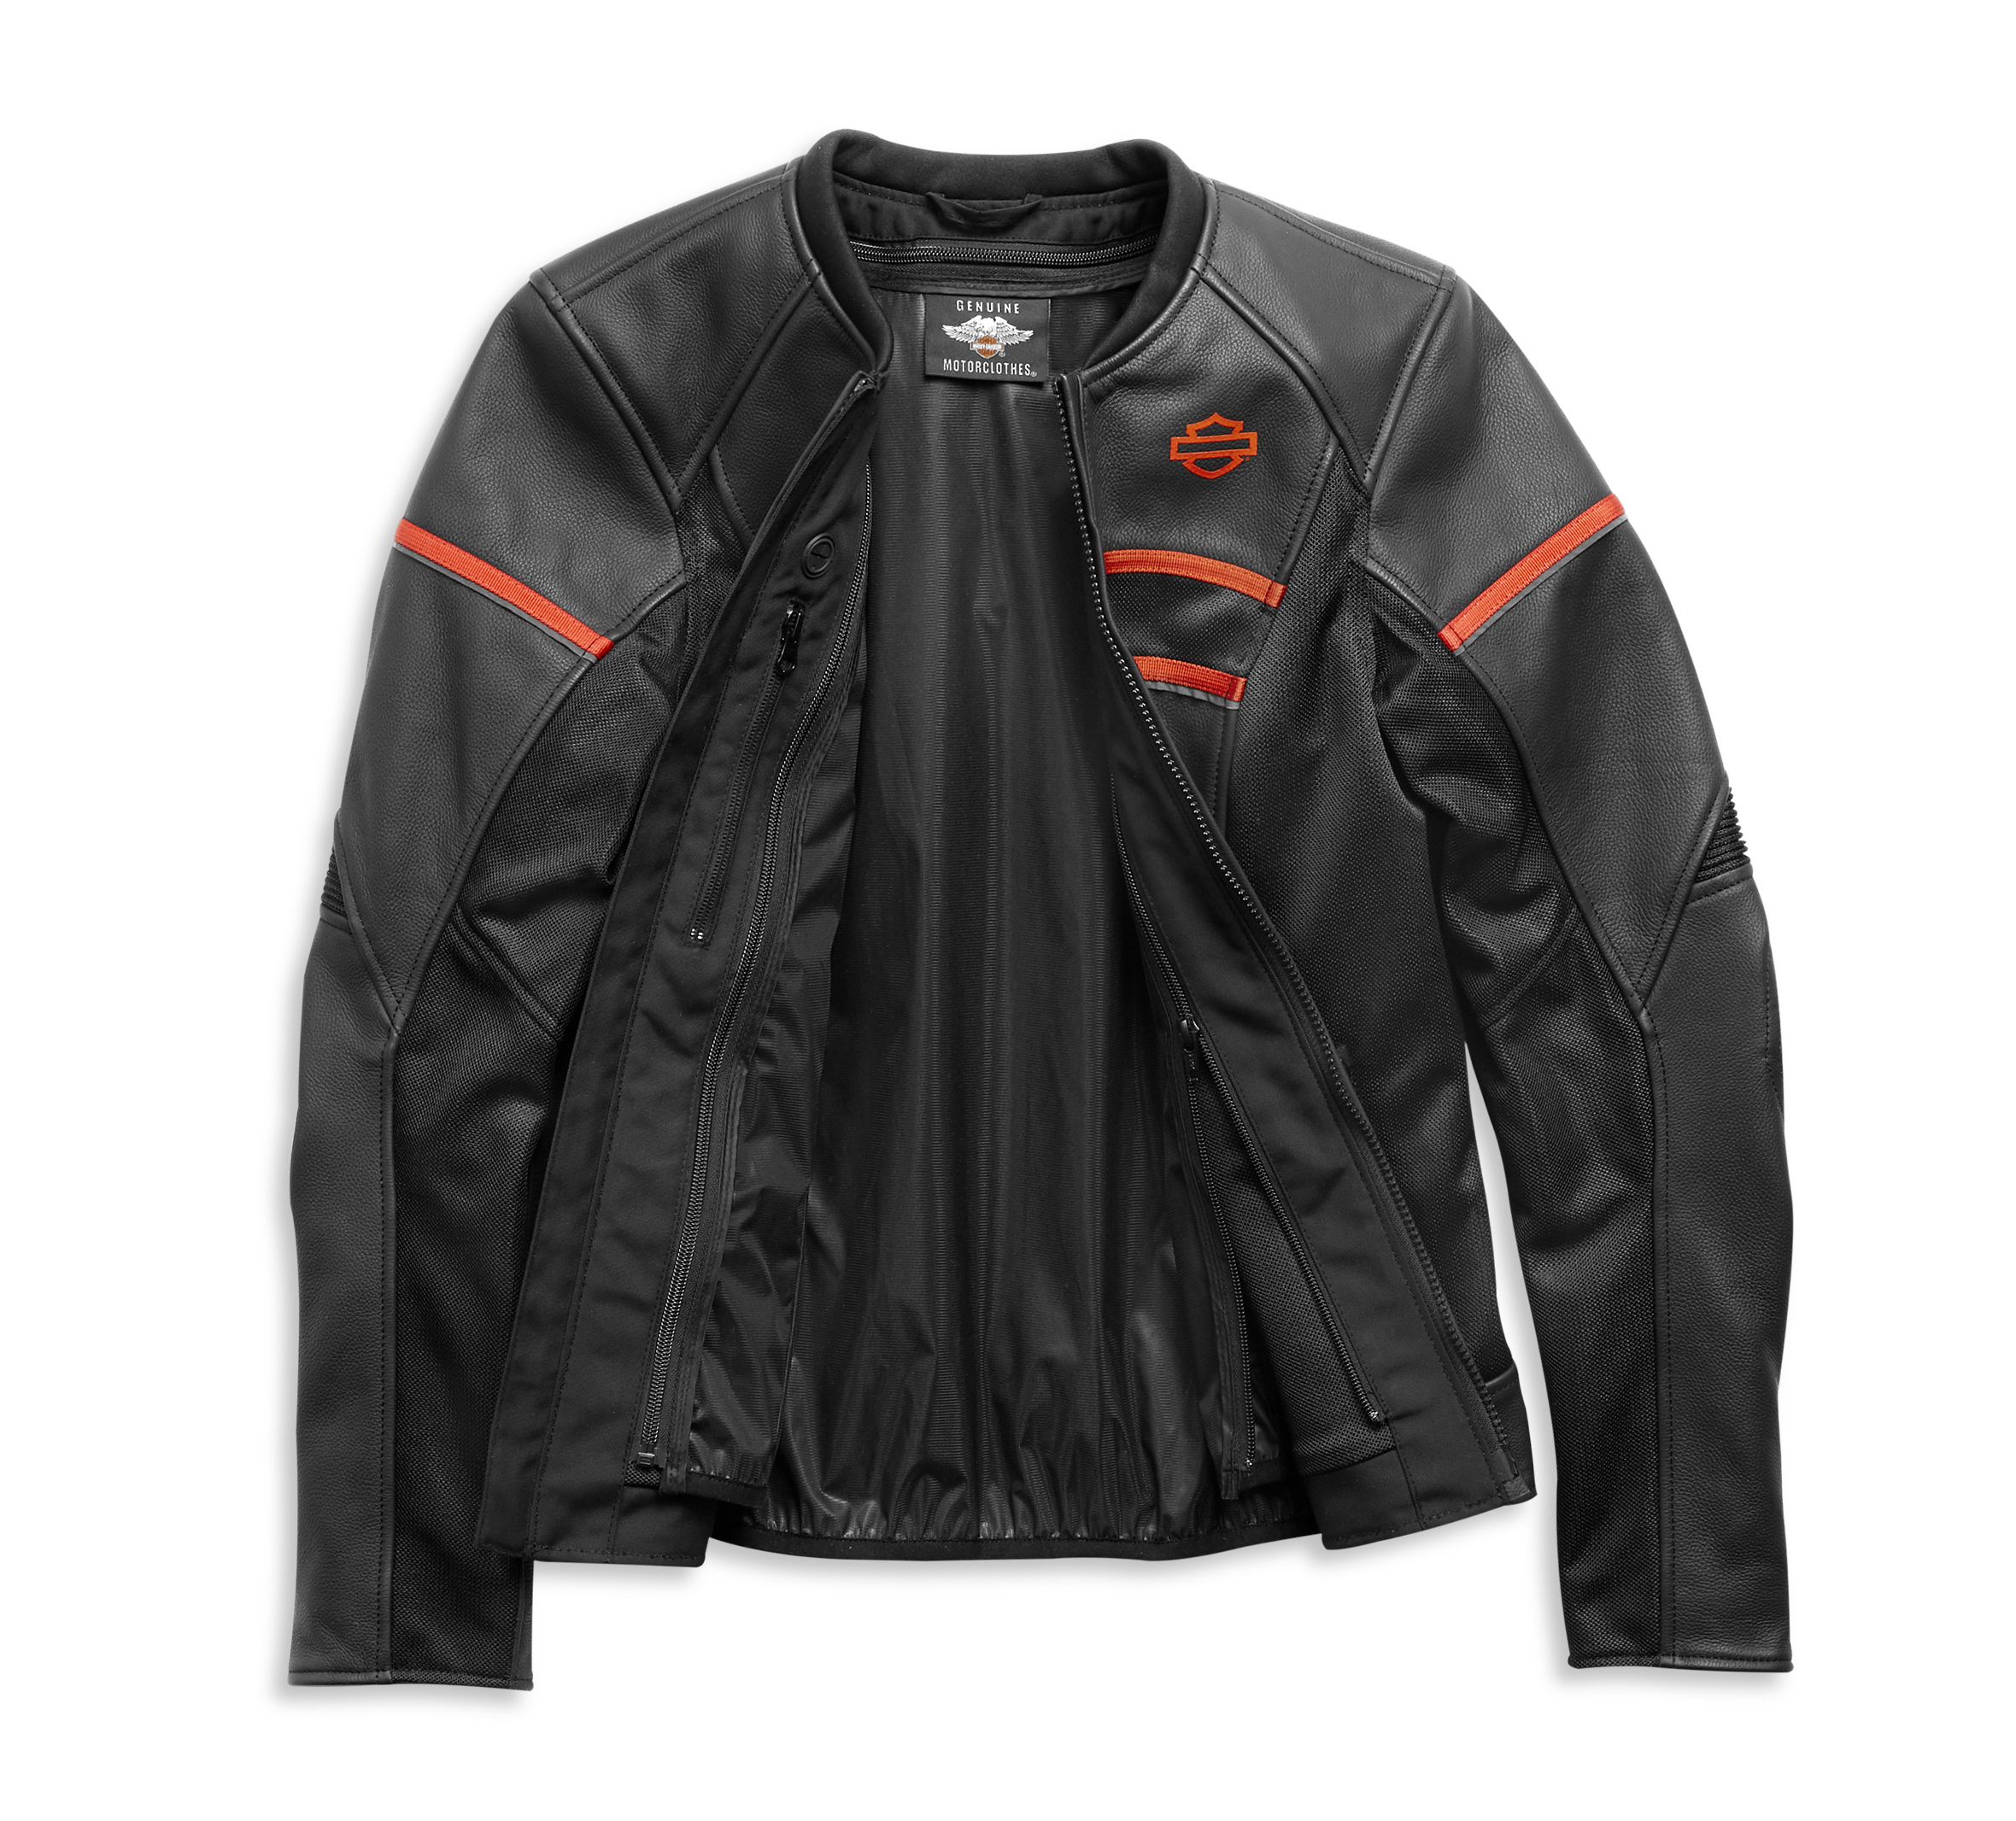 Harley-Davidson H-D Brawler Women's Leather Jacket - 98007-21VW